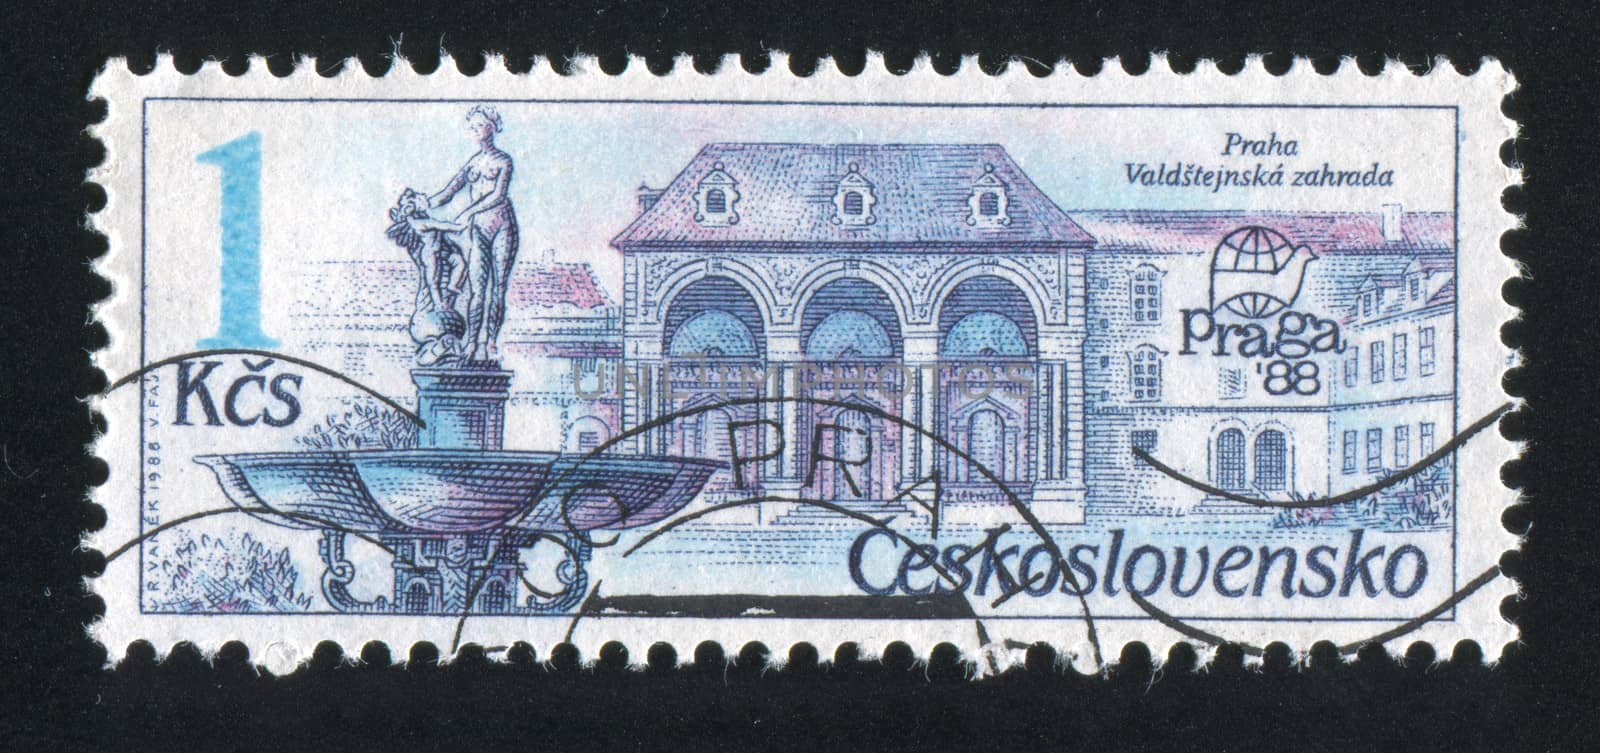 CZECHOSLOVAKIA - CIRCA 1988: stamp printed by Czechoslovakia, shows Exhibition emblem and fountains, Prague, circa 1988